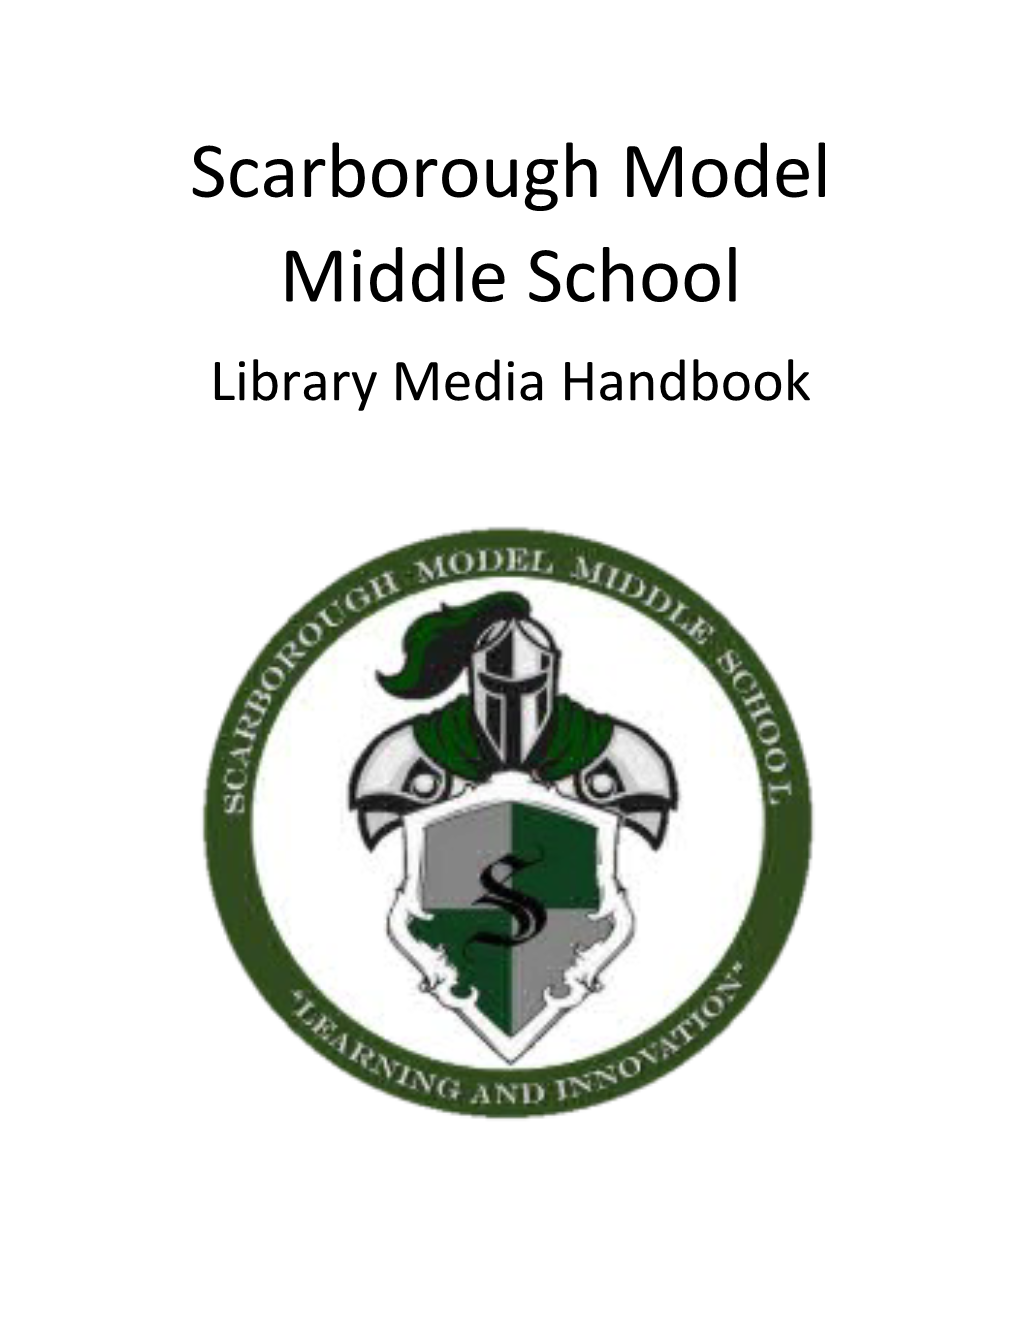 Scarborough Model Middle School